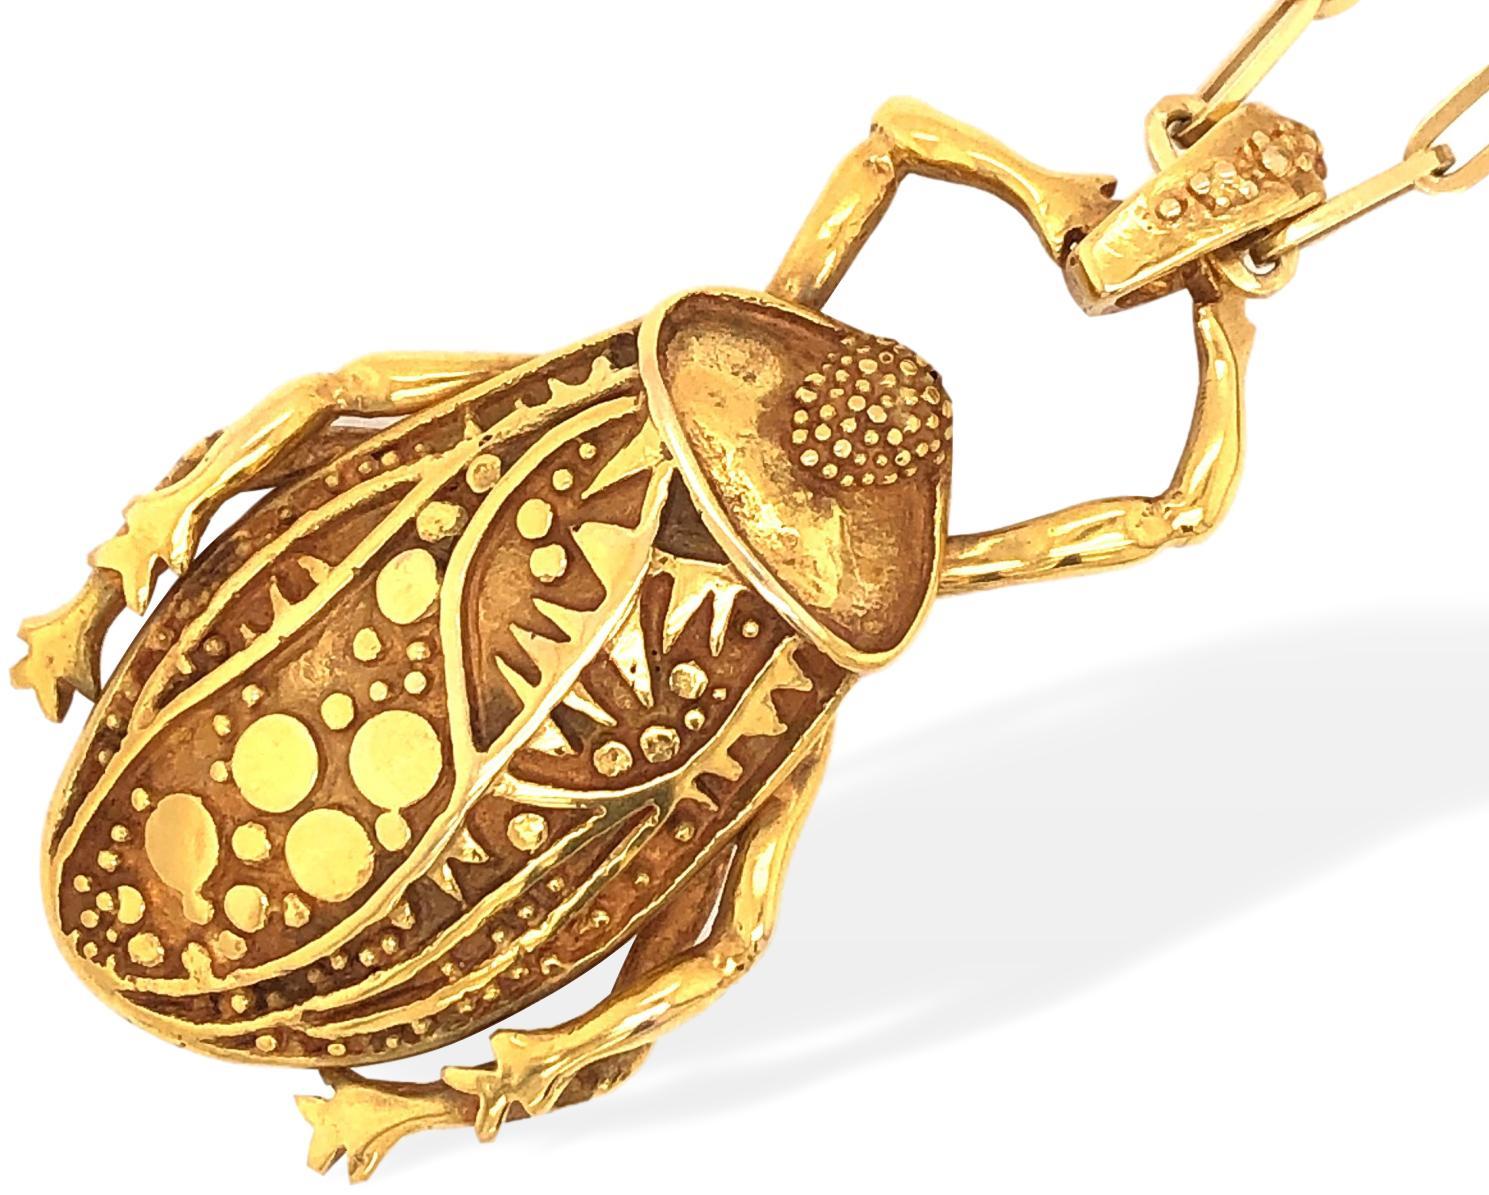 Modernist 15k gold necklace  pendant by Artist-craftmen Maureen Wicke. The 2 3/4